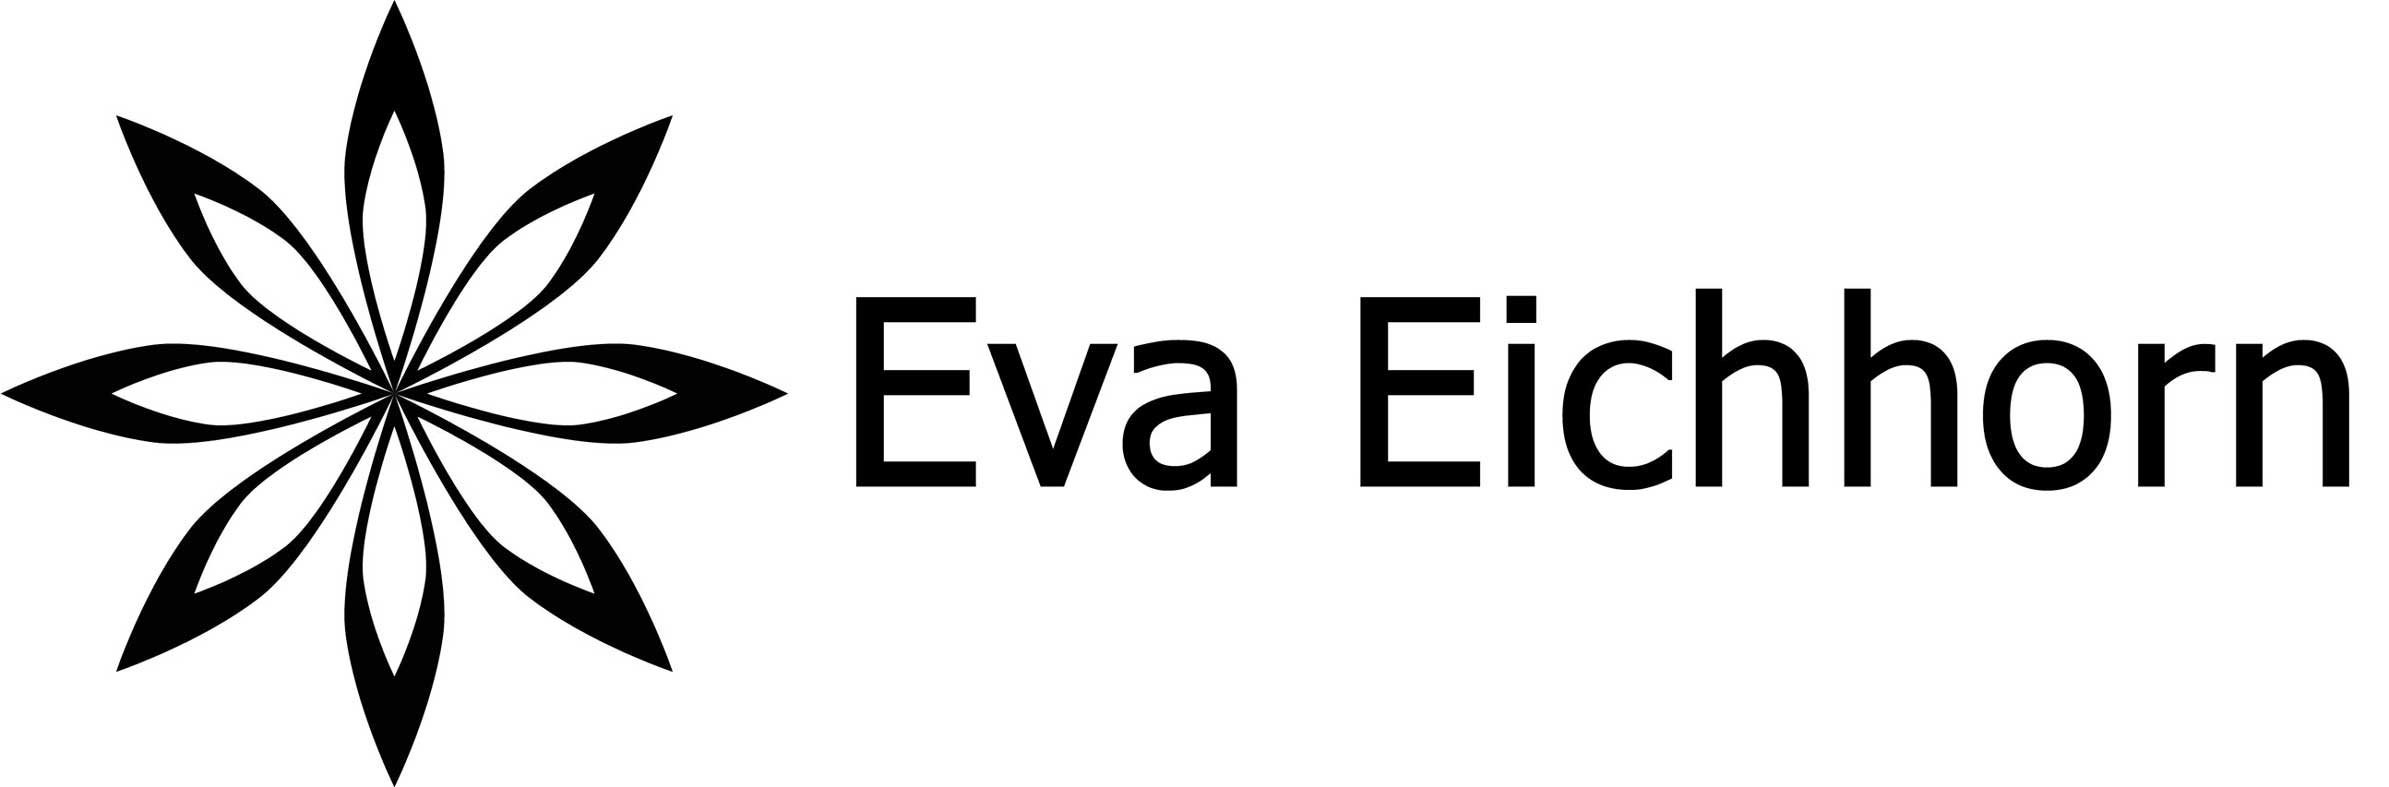 Eva Eichhorn